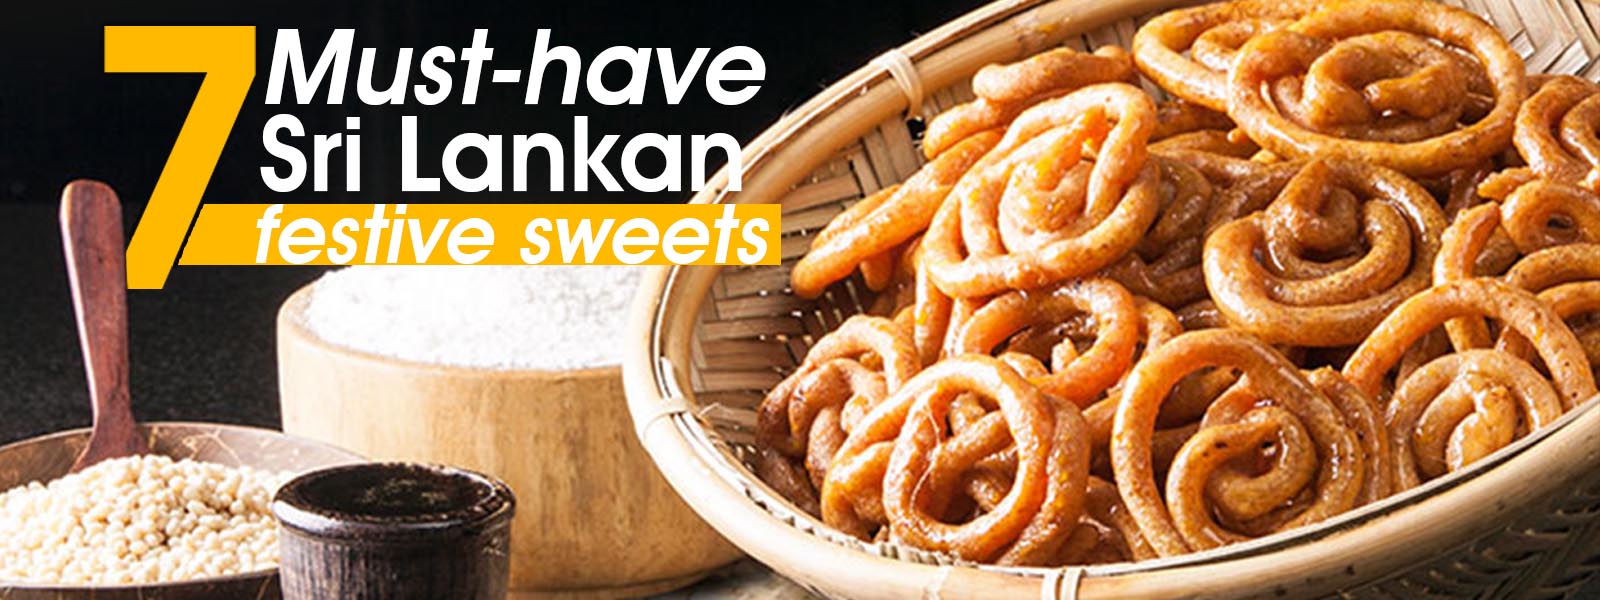 7 must-have Sri Lankan festive sweets